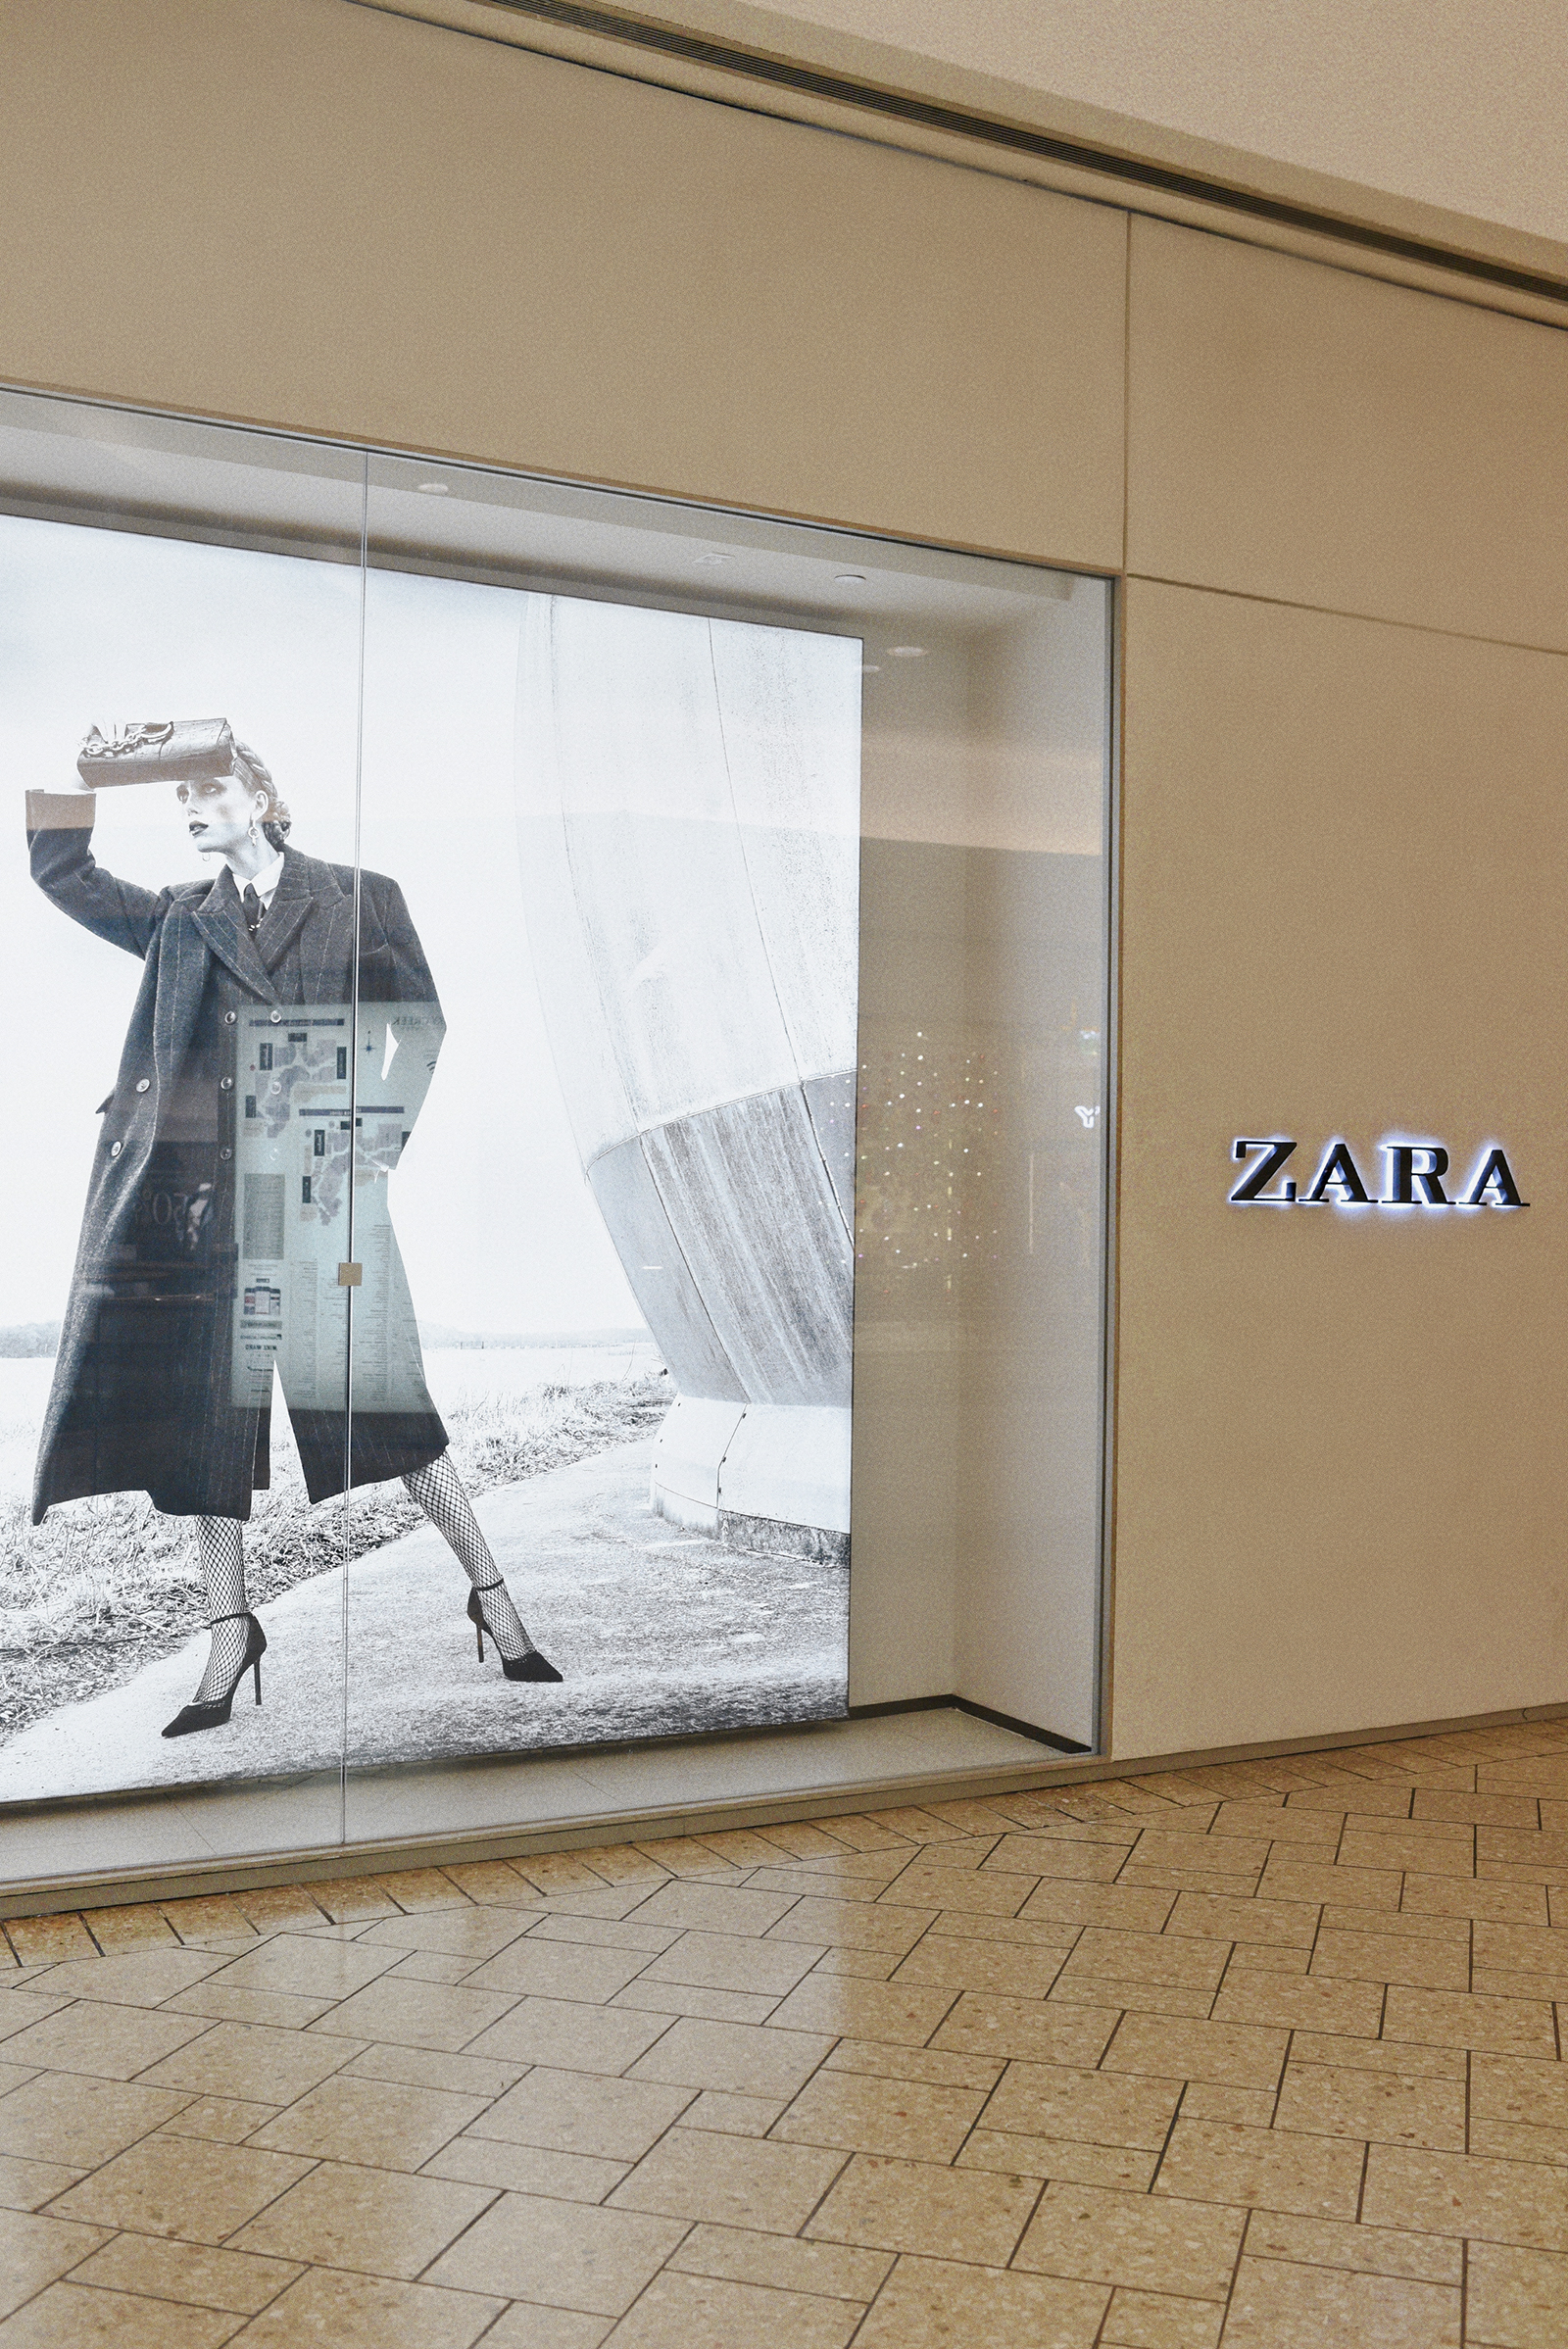 Zara store in Cherry Creek Shopping center in Denver. 